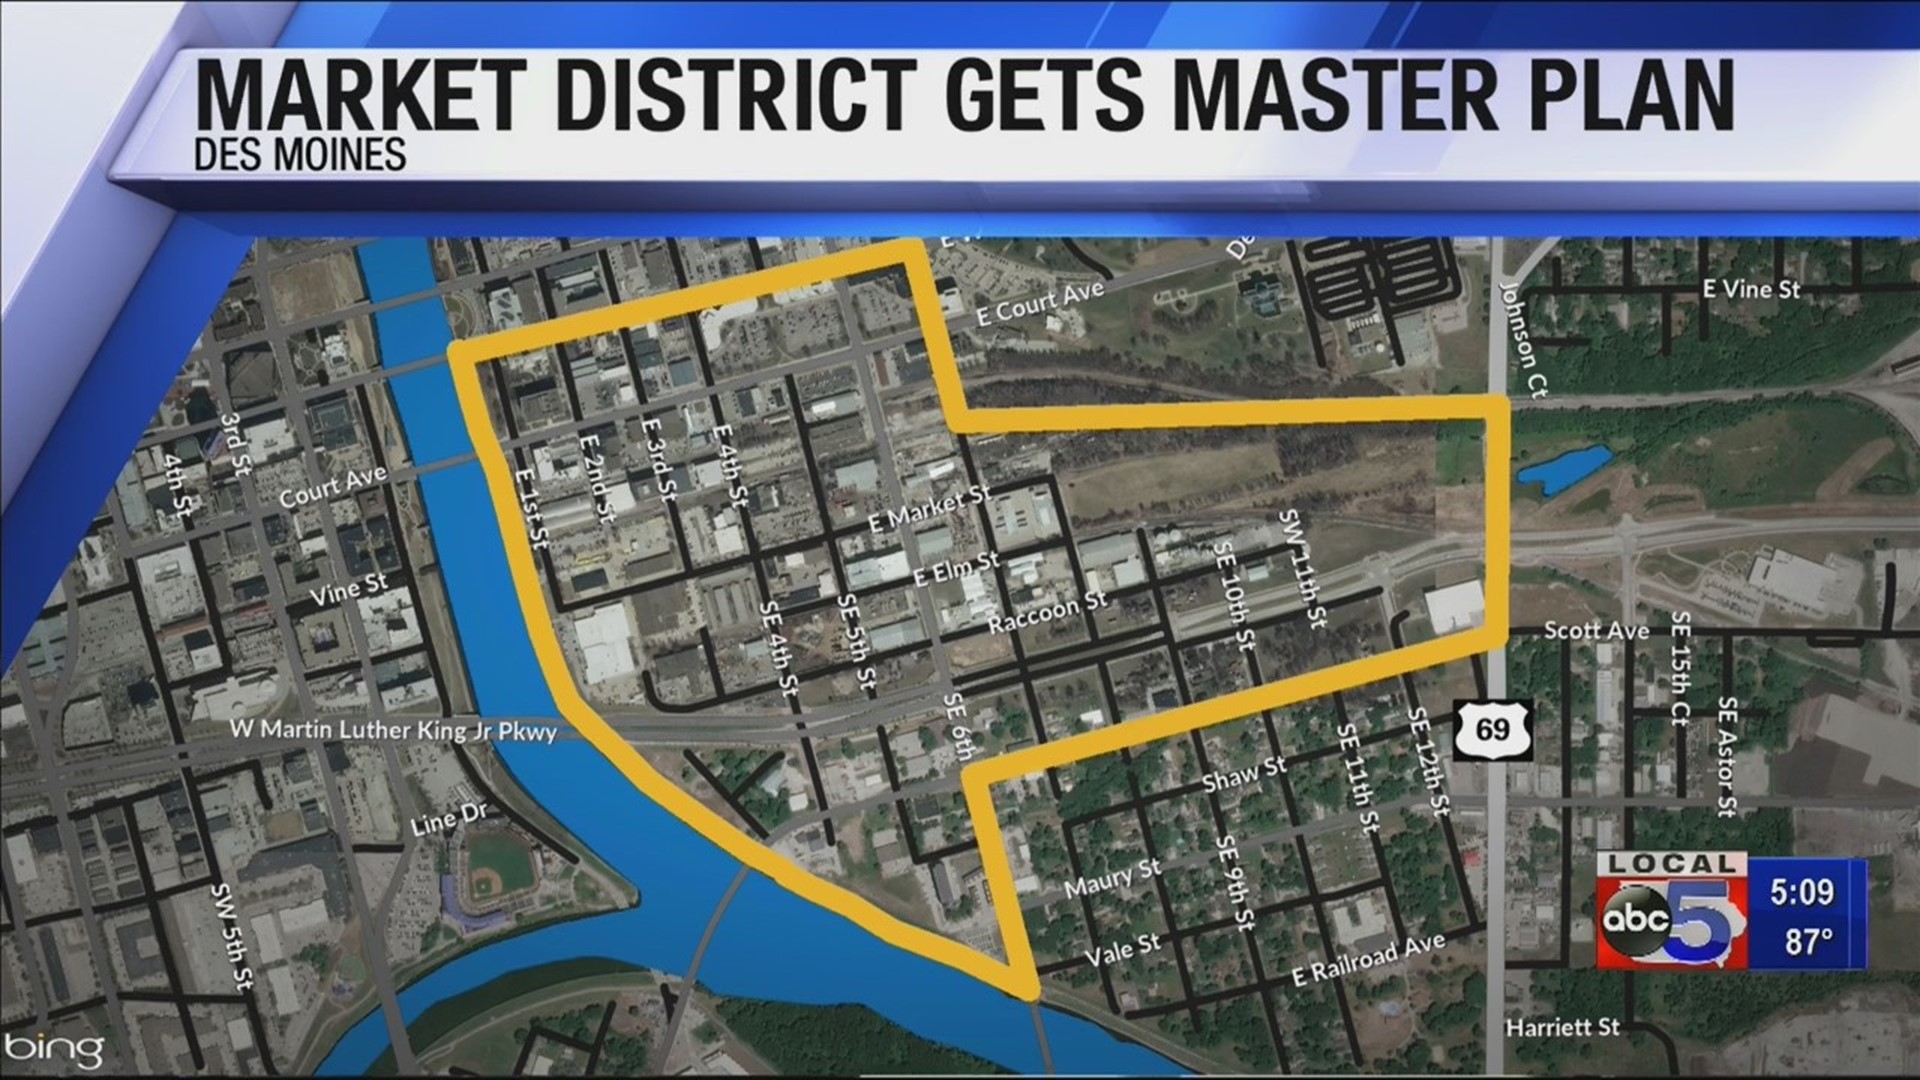 Des Moines proposes plan for Market District in East Village